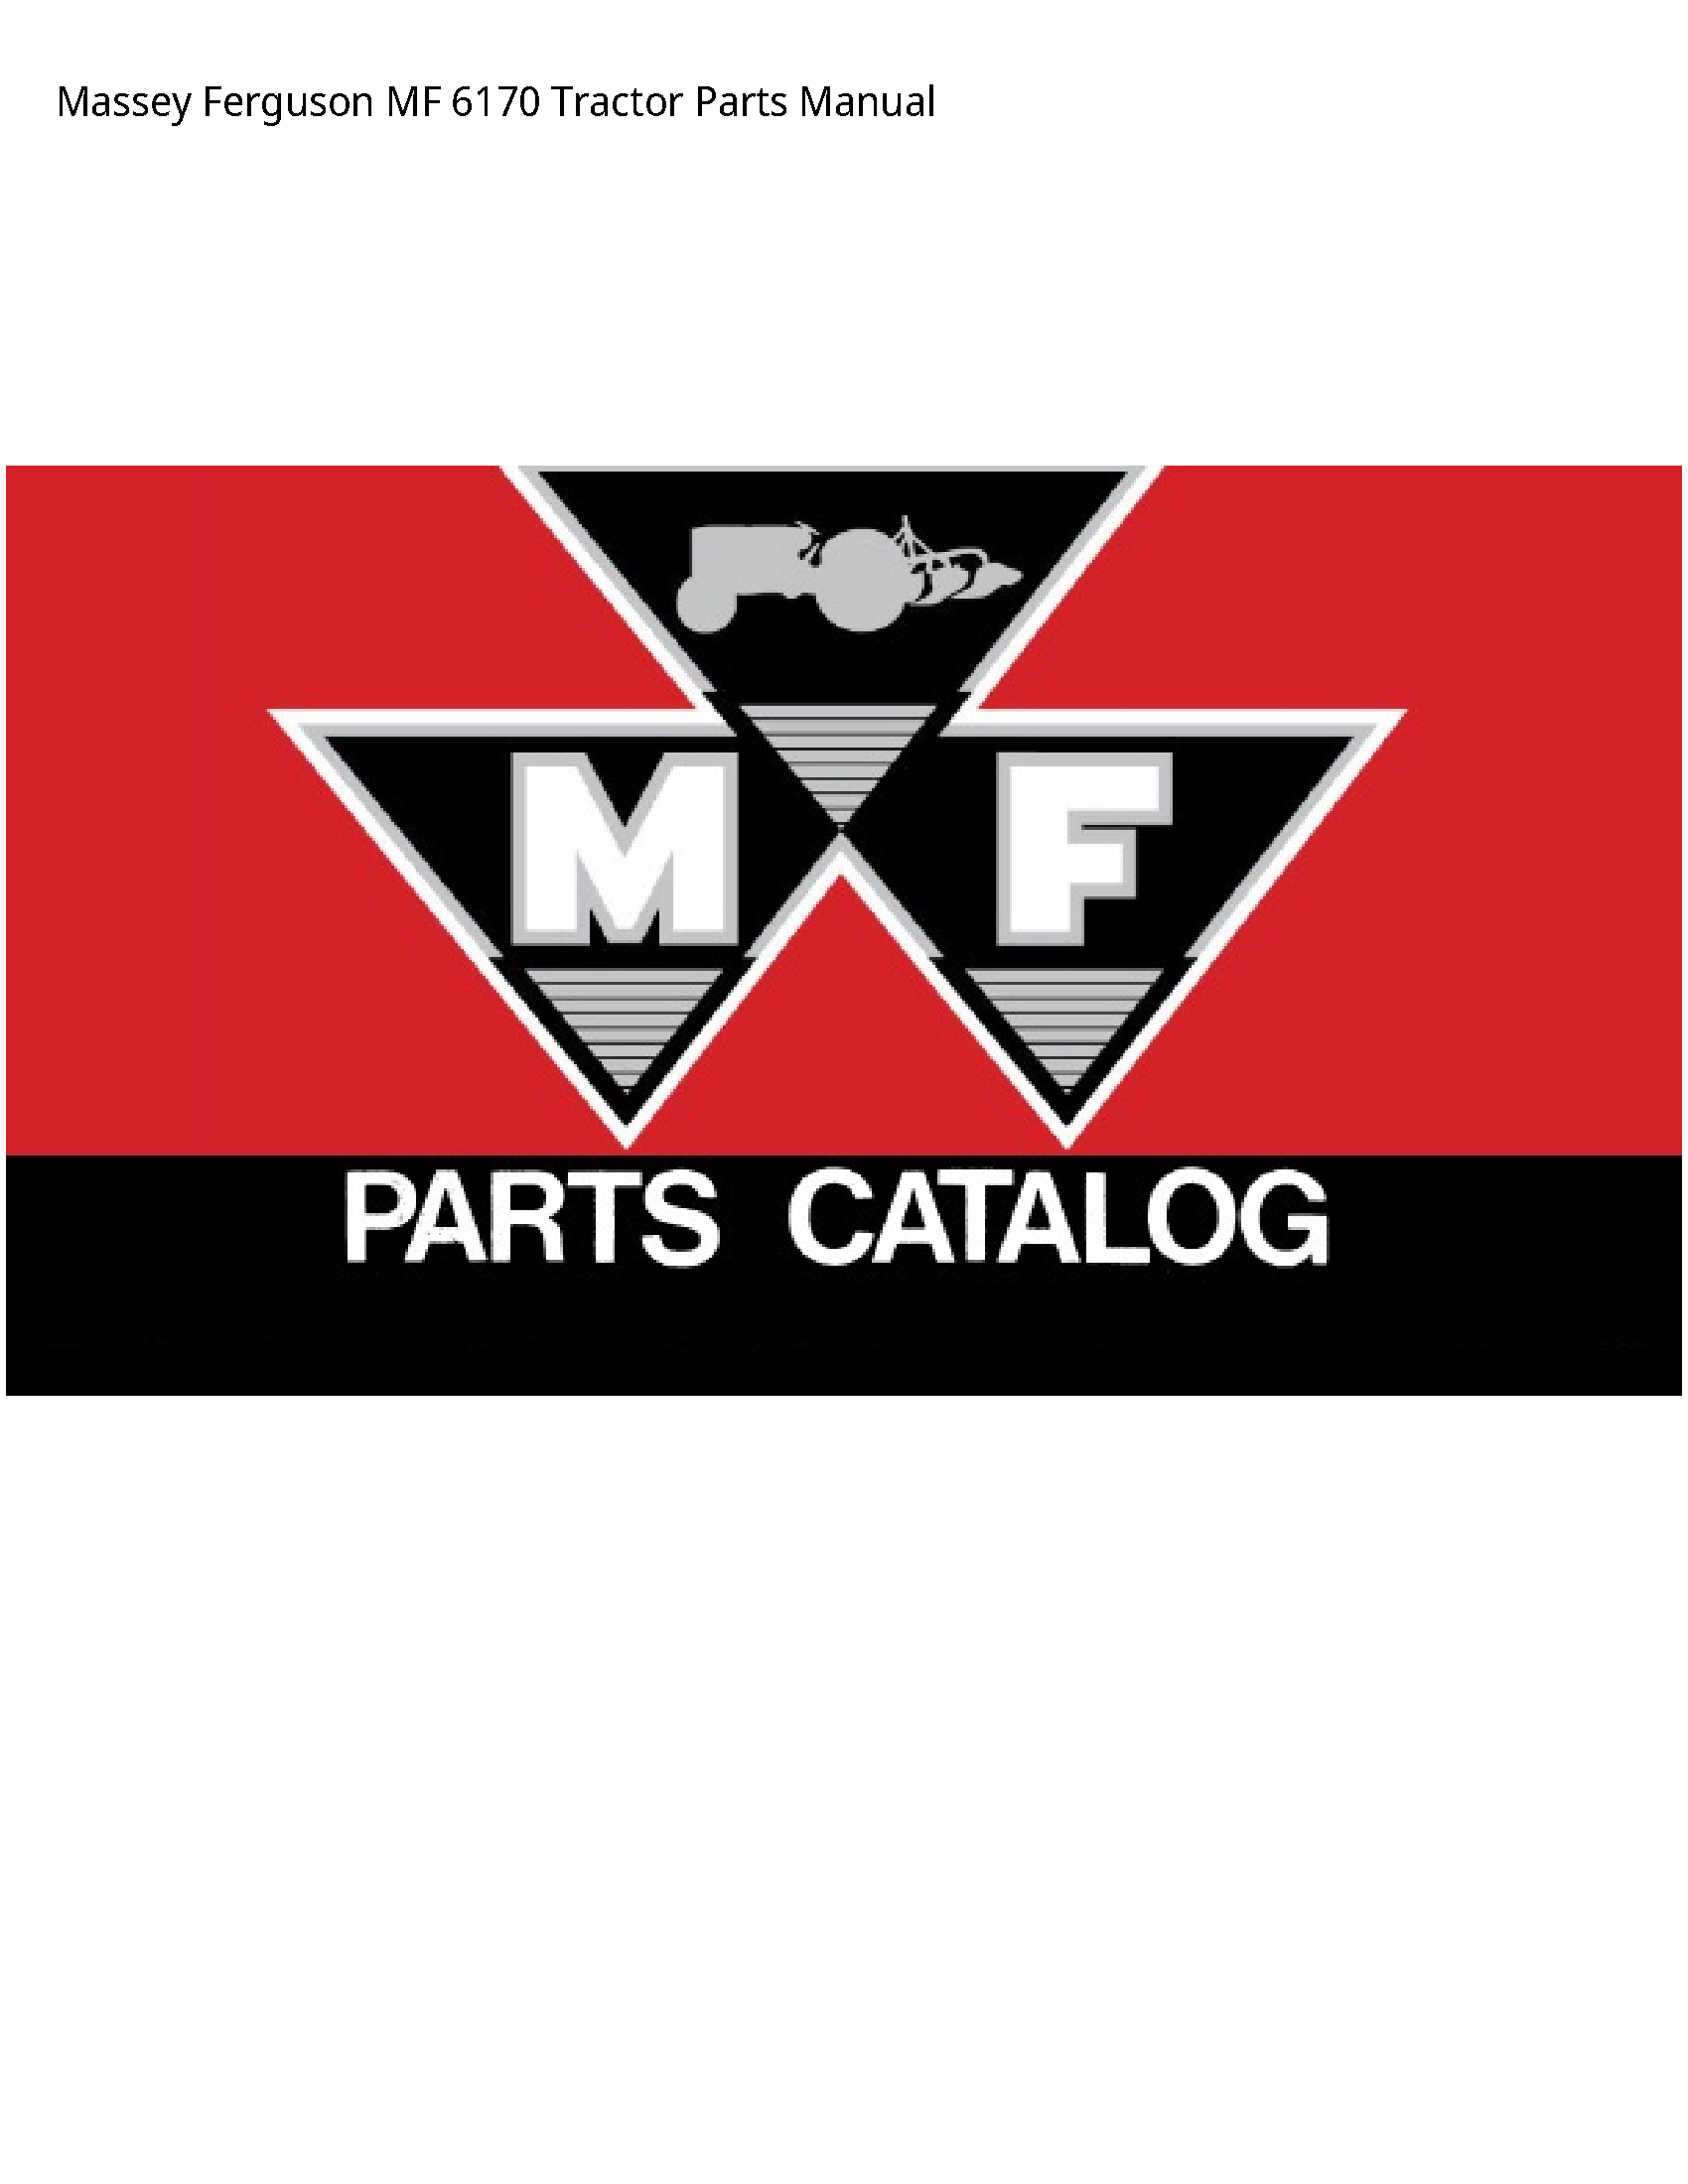 Massey Ferguson 6170 MF Tractor Parts manual